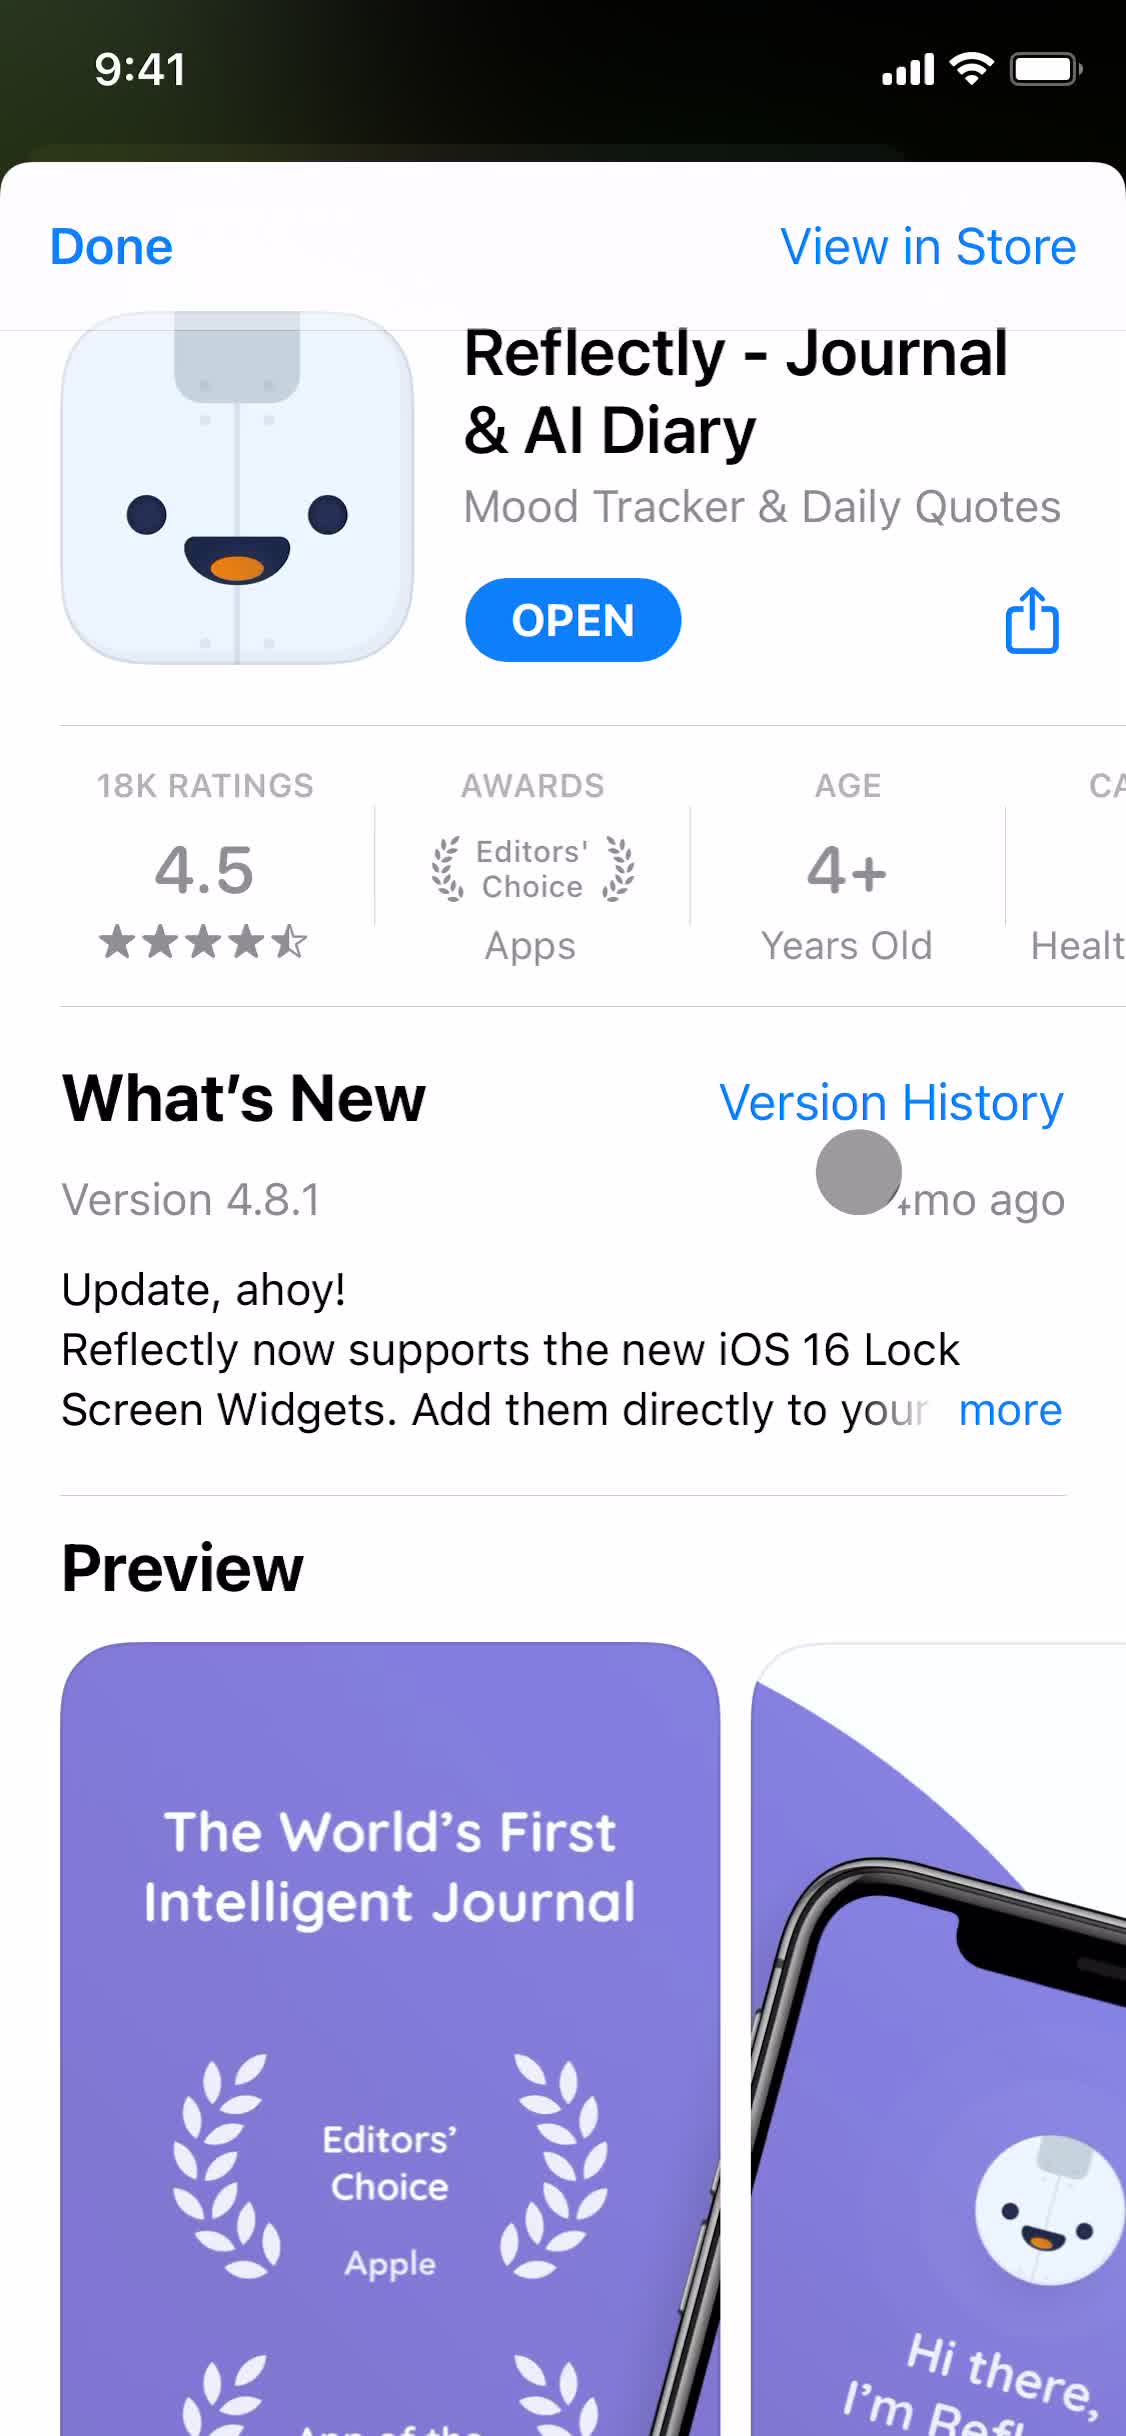 Reflectly app store listing screenshot